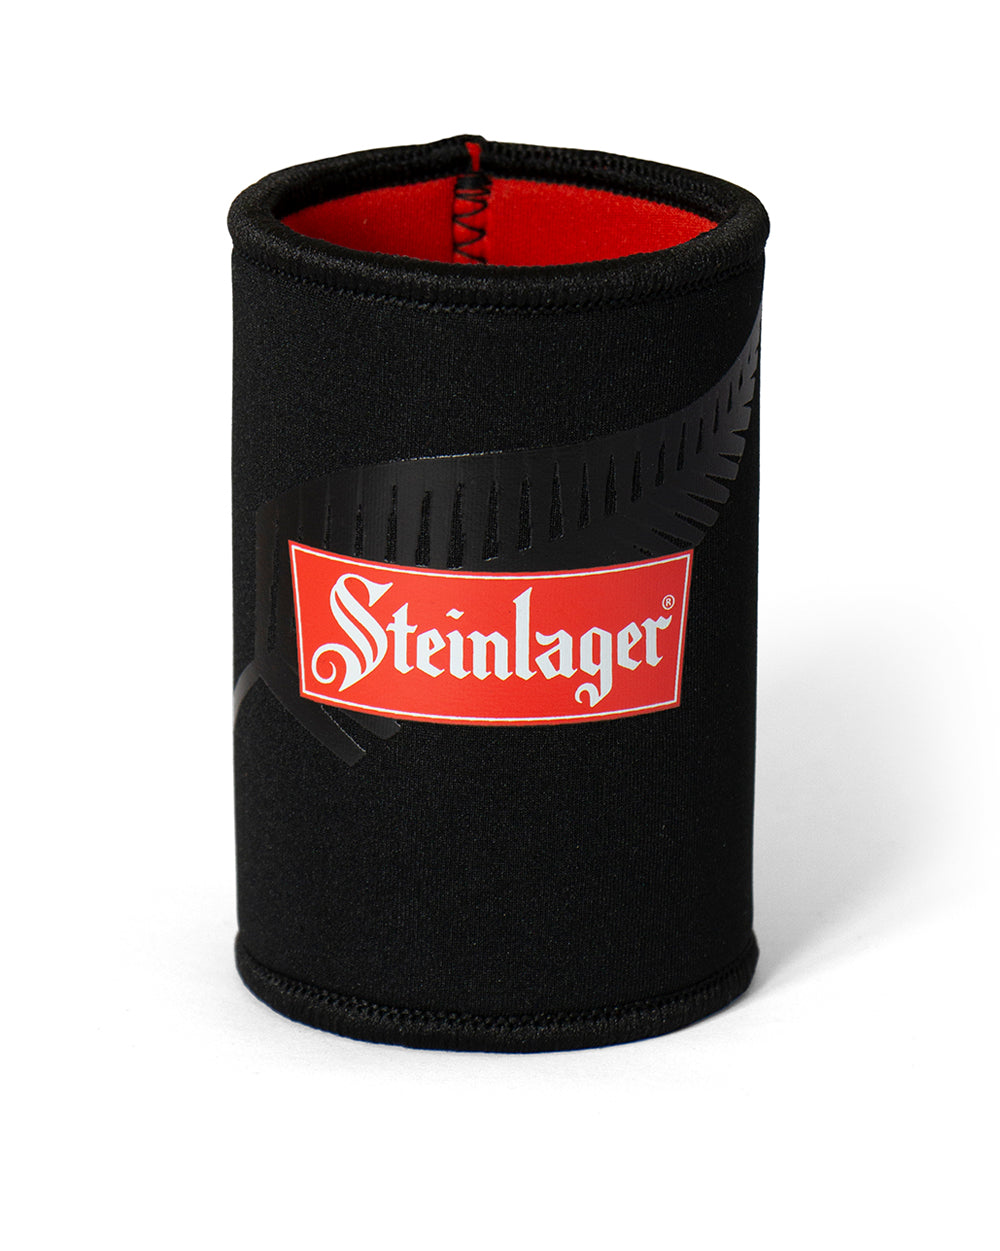 Steinlager Stubby Holder -  Beer Gear Apparel & Merchandise - speights - lion red - vb - tokyo dry merch